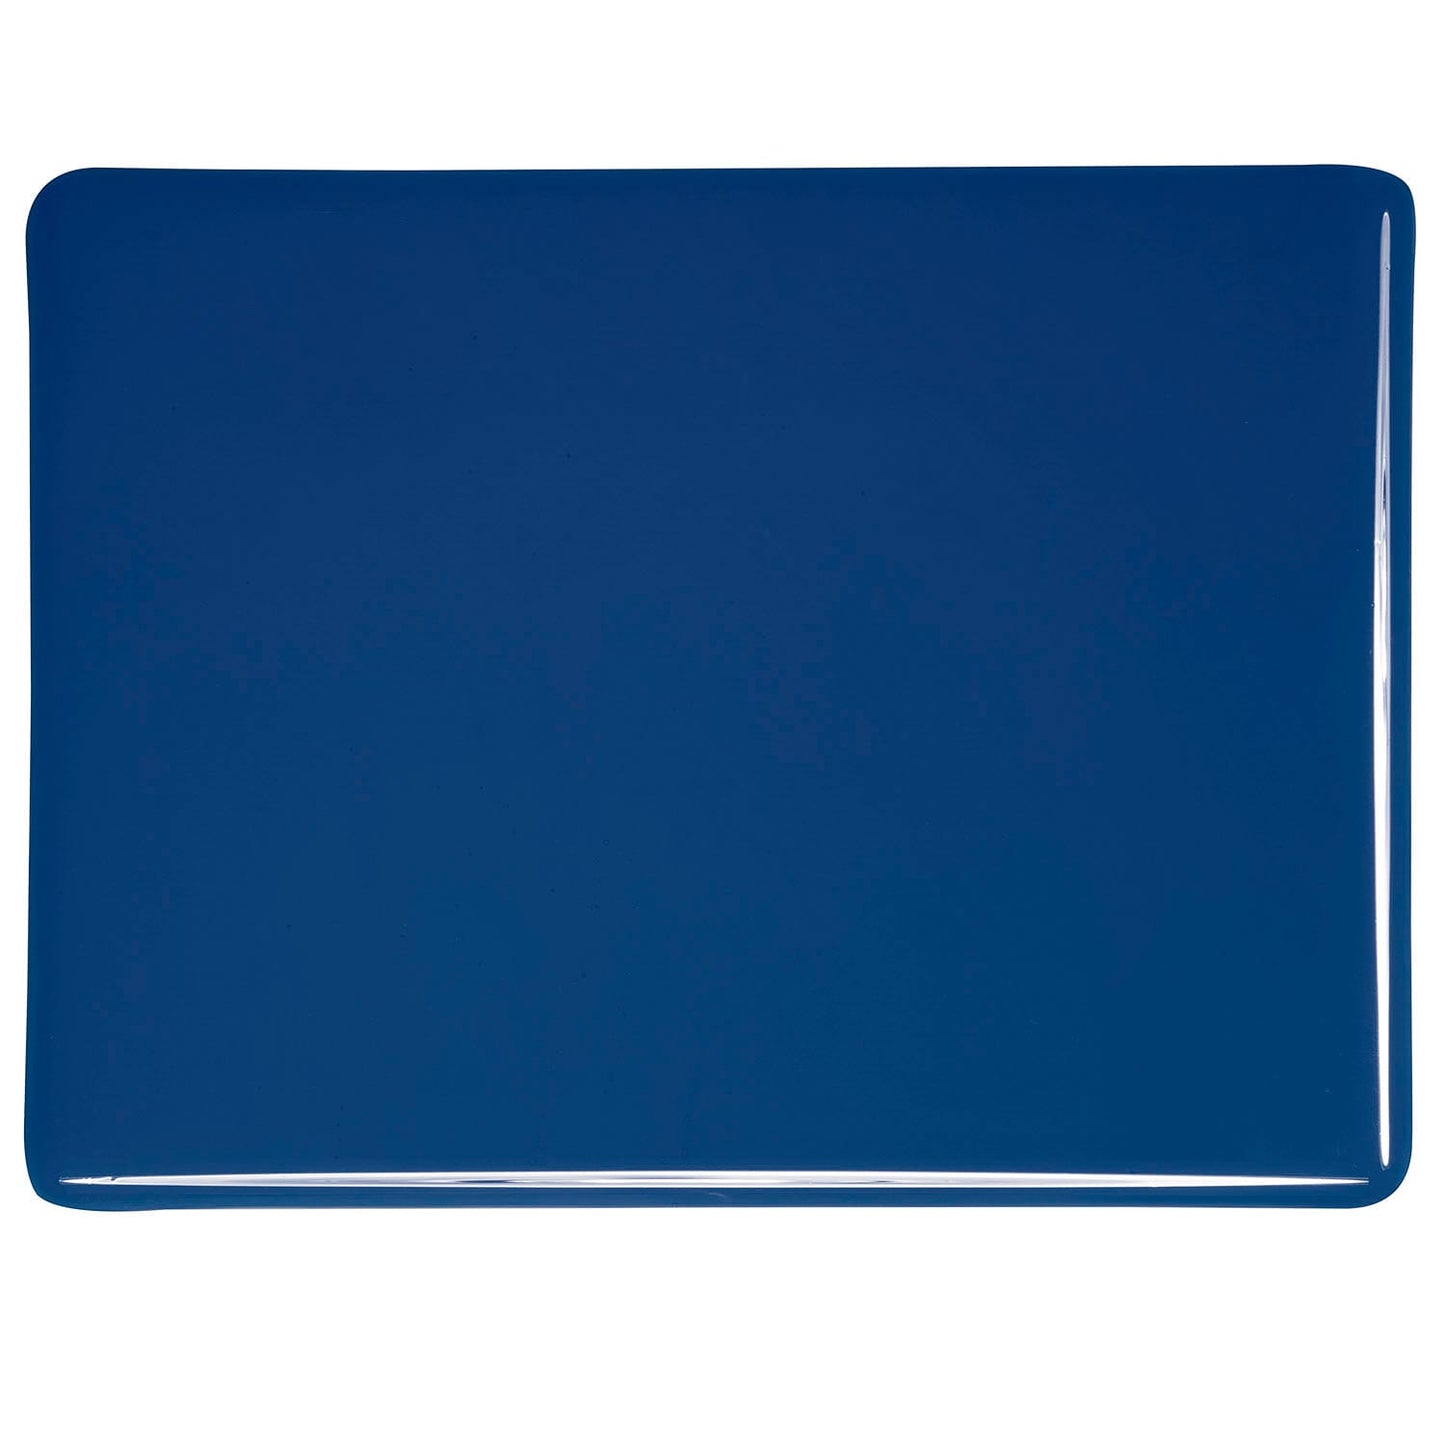 Bullseye COE90 Fusing Glass 000148 Indigo Blue Full Sheet